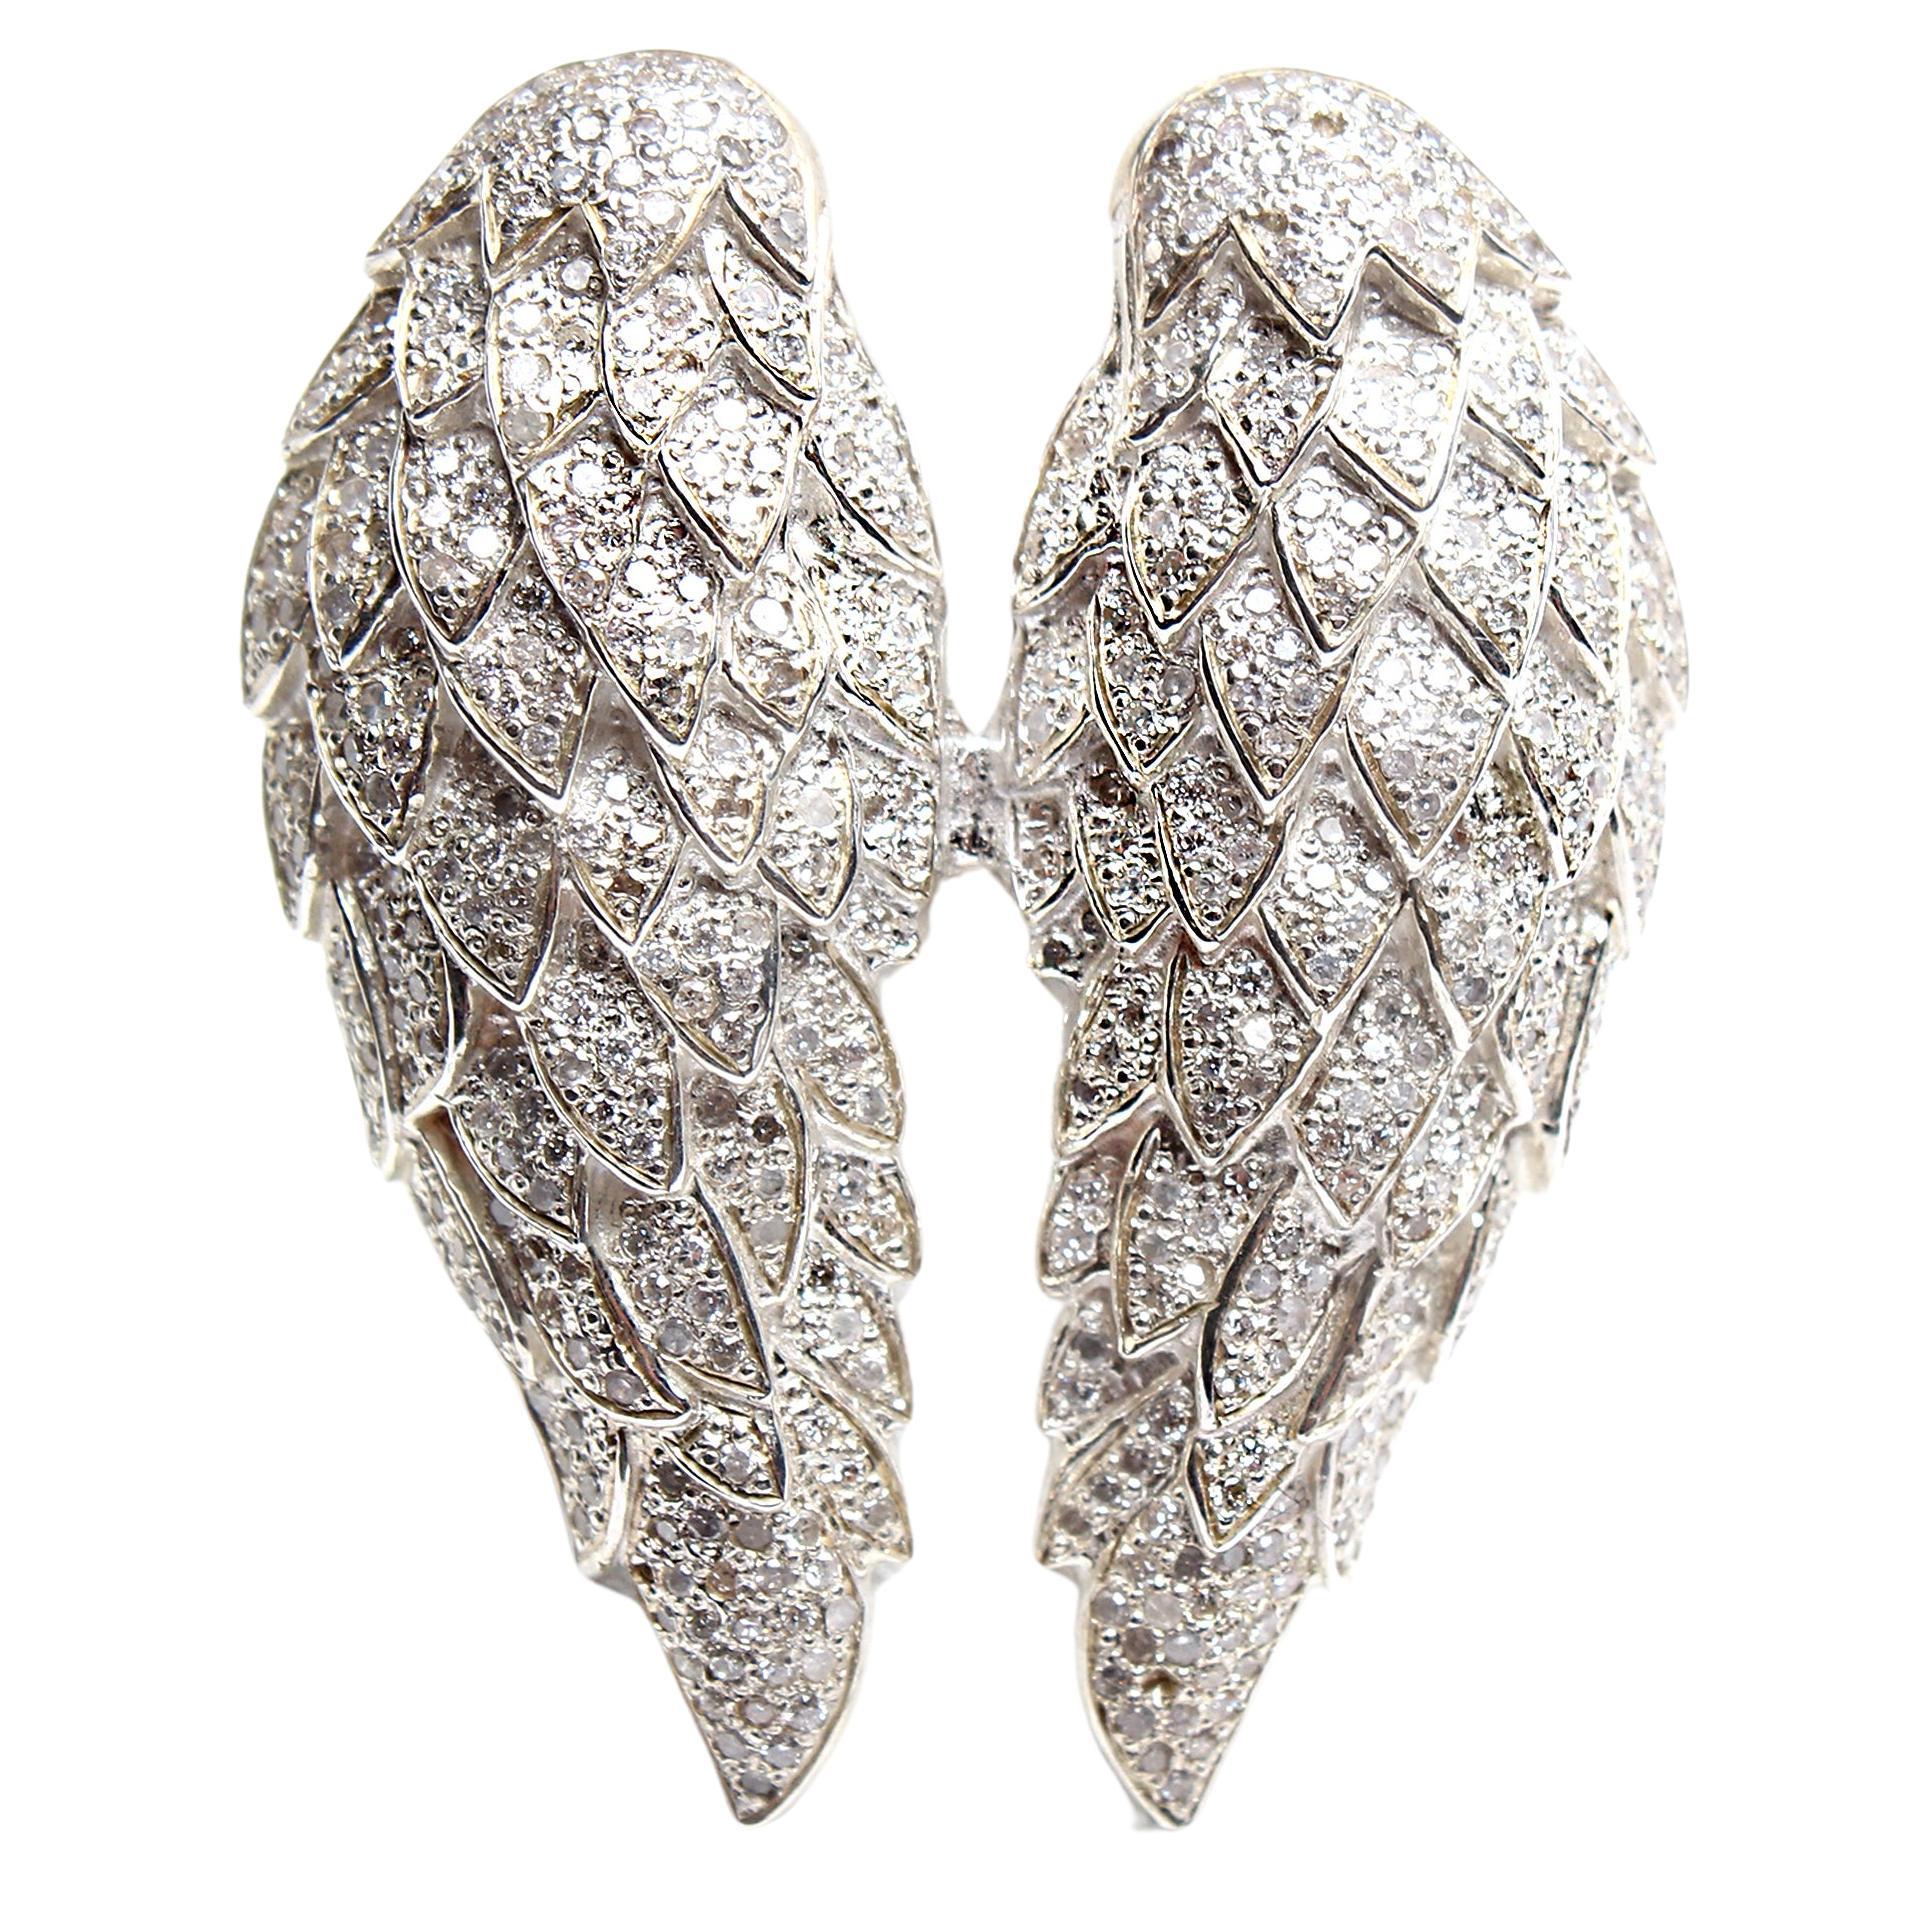 Clarissa Bronfman Signature Diamond Angel Wing Ring For Sale